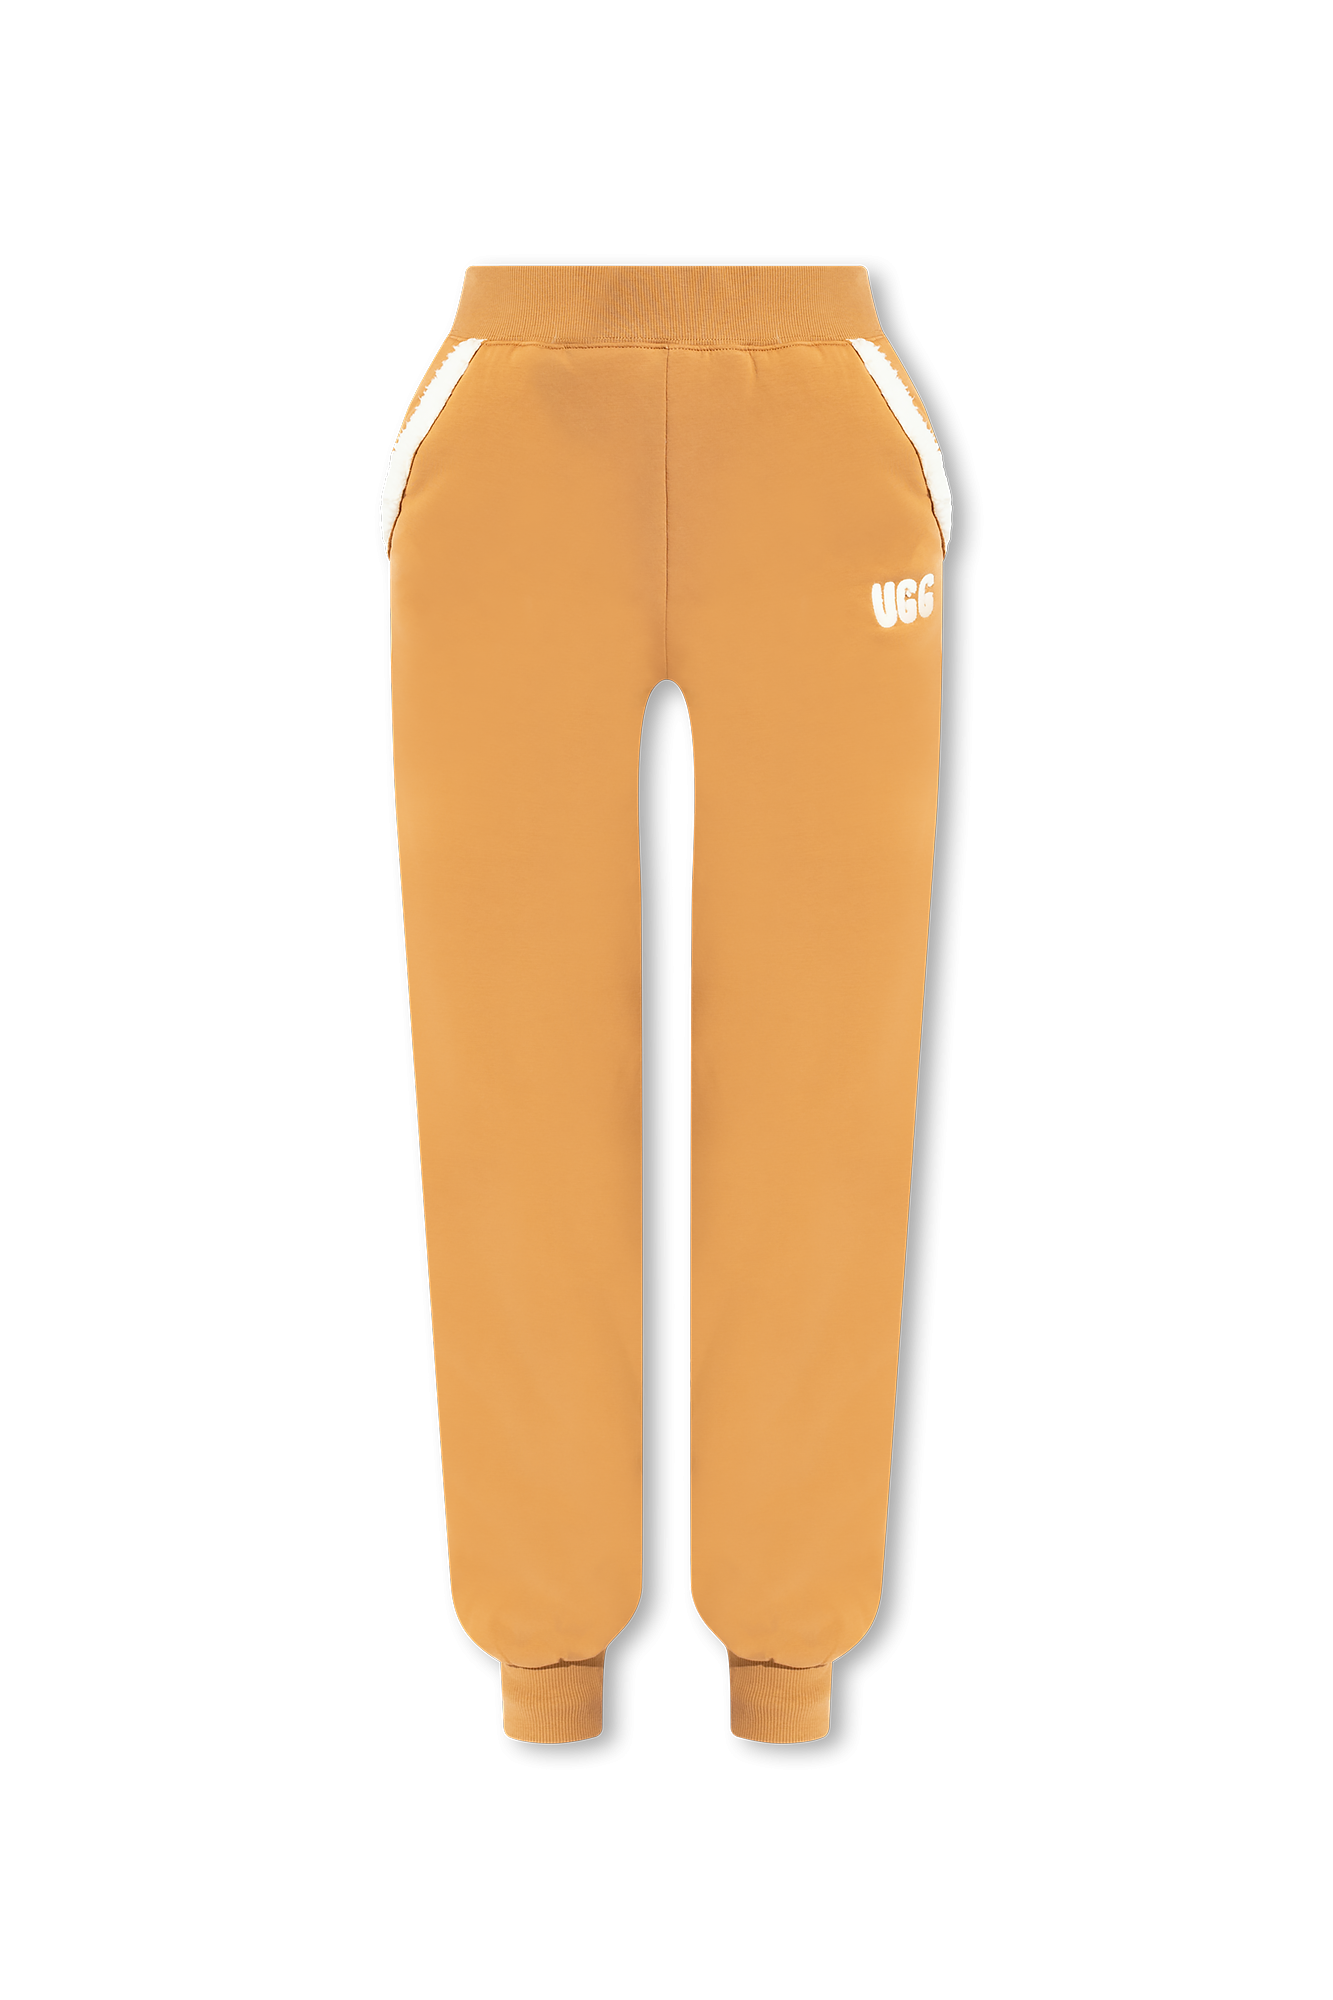 Brown 'Daylin' sweatpants UGG - IetpShops Netherlands - UGG Classic Short  II boots in chocolate